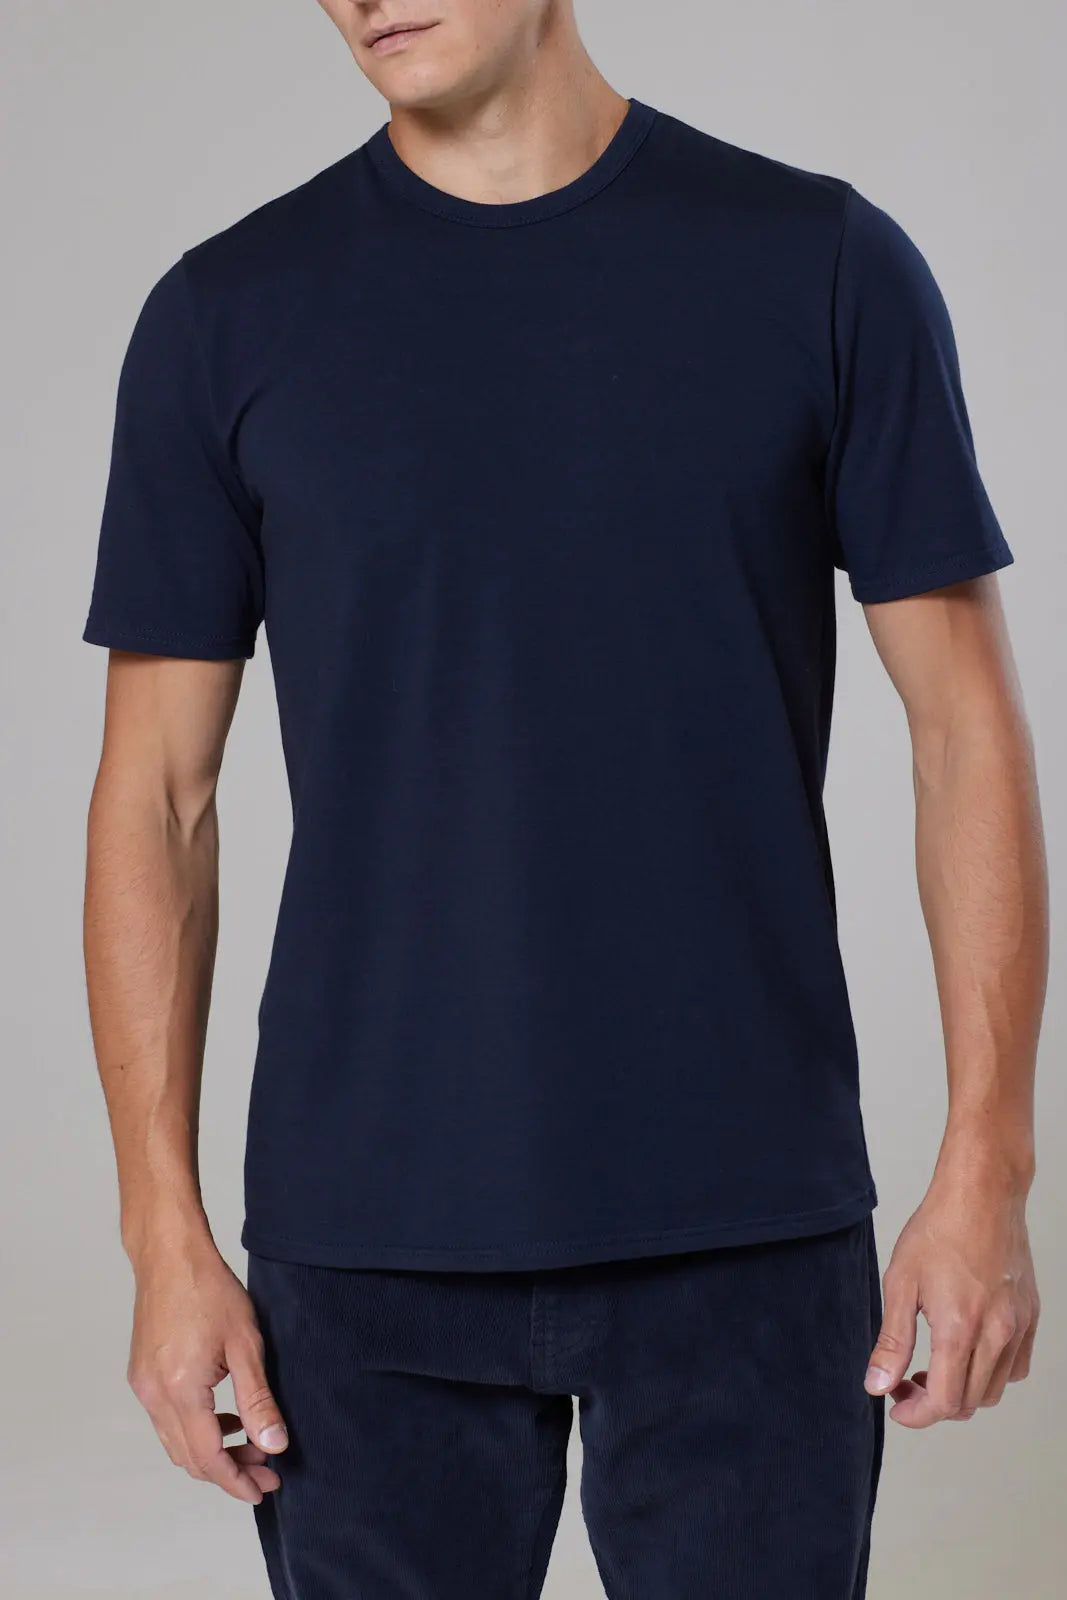 Trueman Short Sleeve Tee Shirt - Navy - Wear London